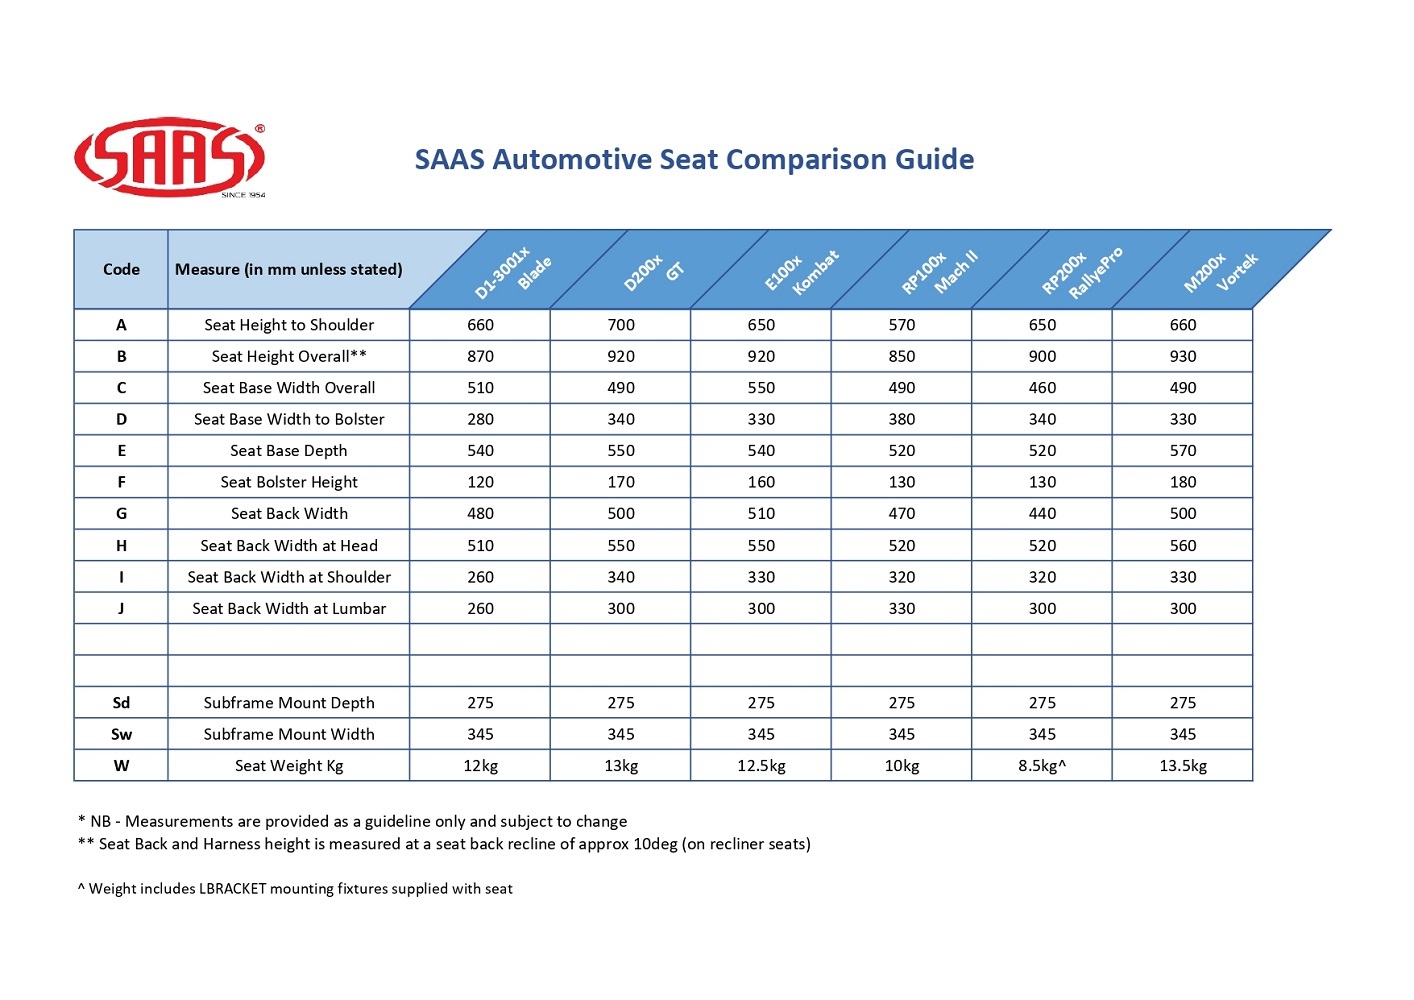 SAAS Vortek Seat Dual Recline Black/Grey ADR Compliant